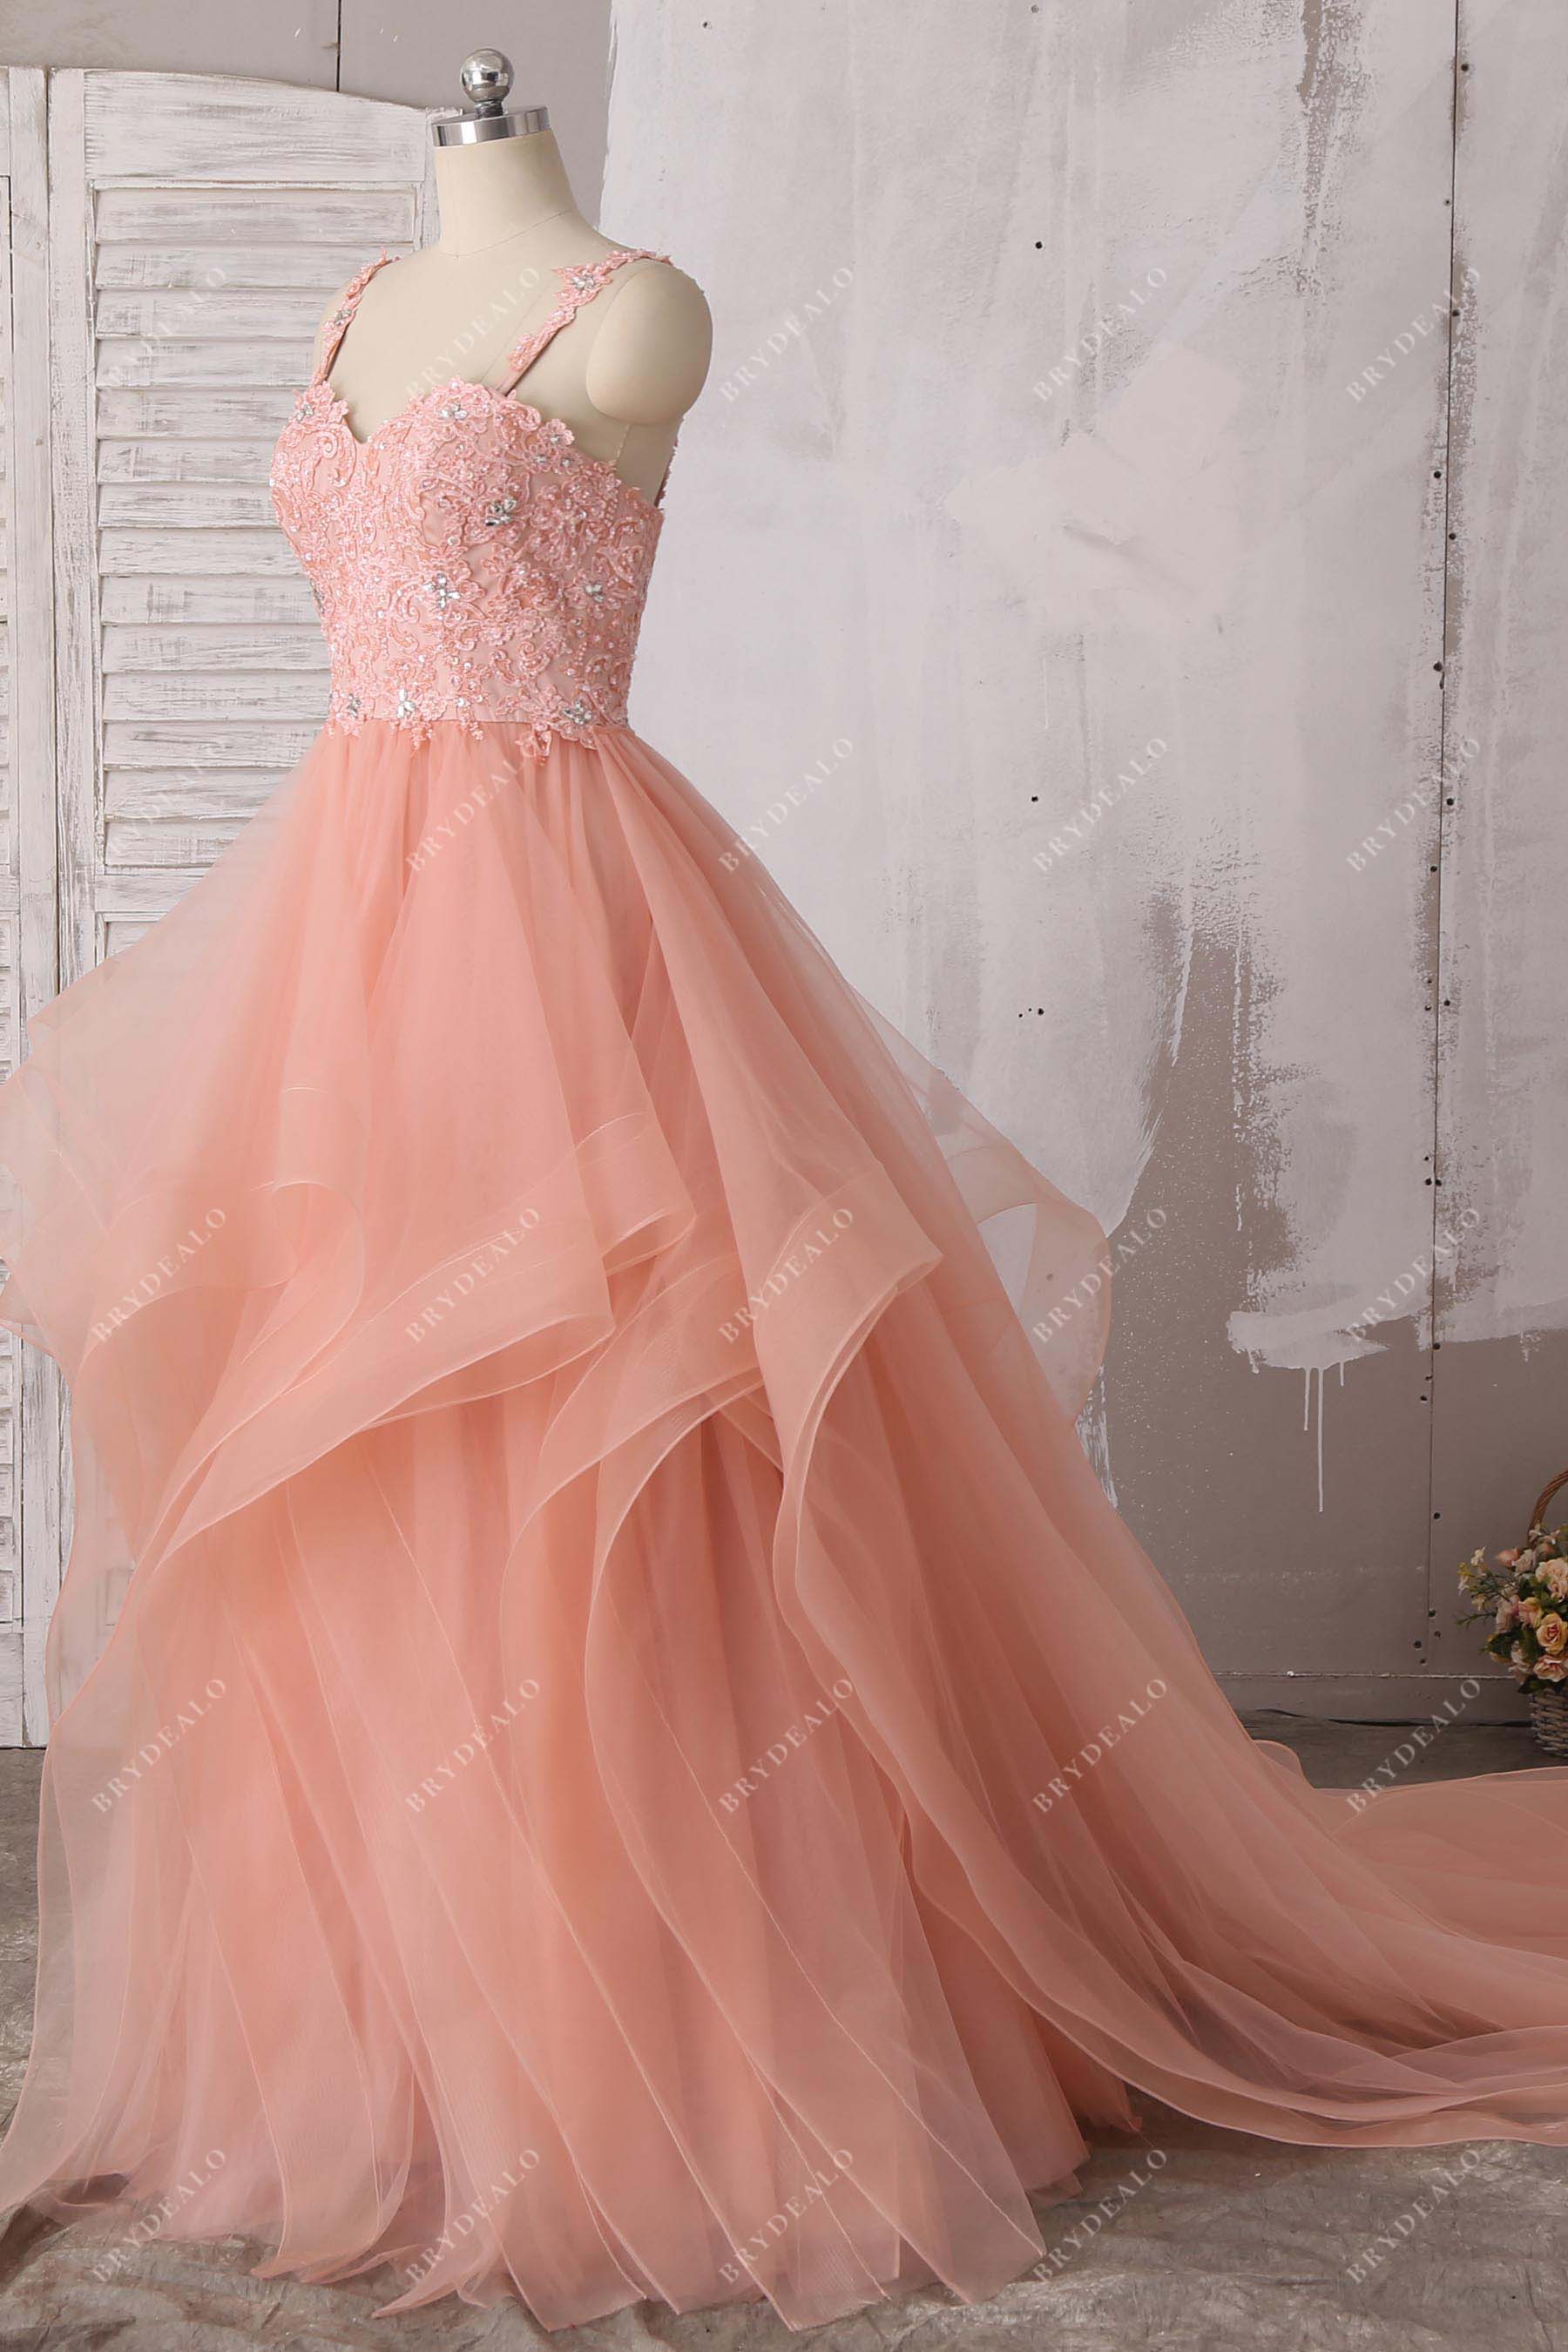 ruffled tulle sleeveless lace prom dress